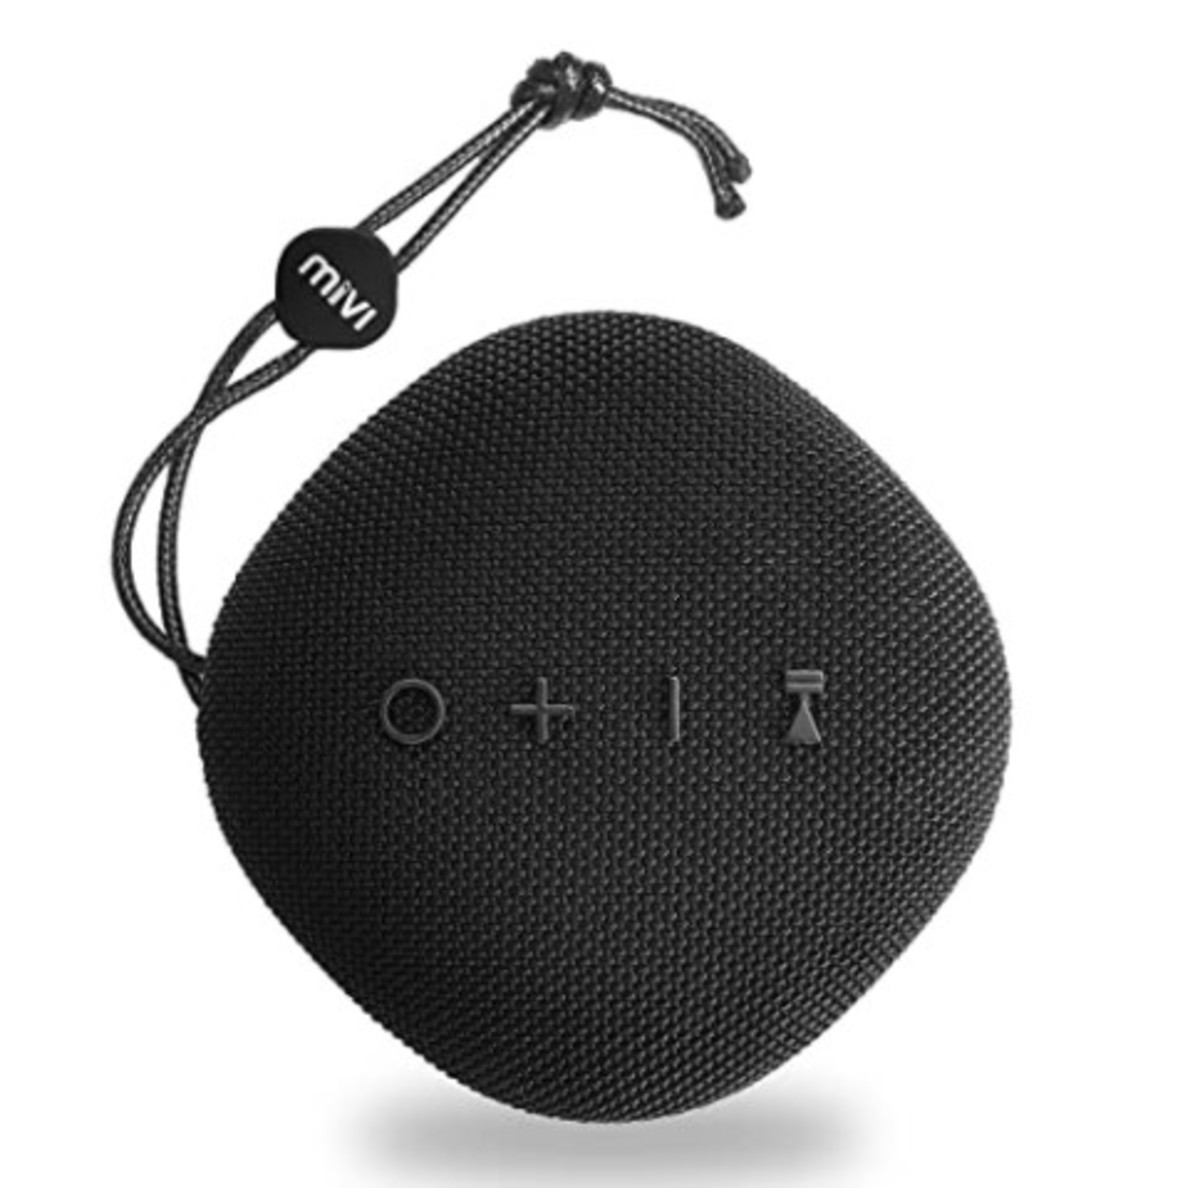 Honest Review: Mivi Moonstone Bluetooth Speaker